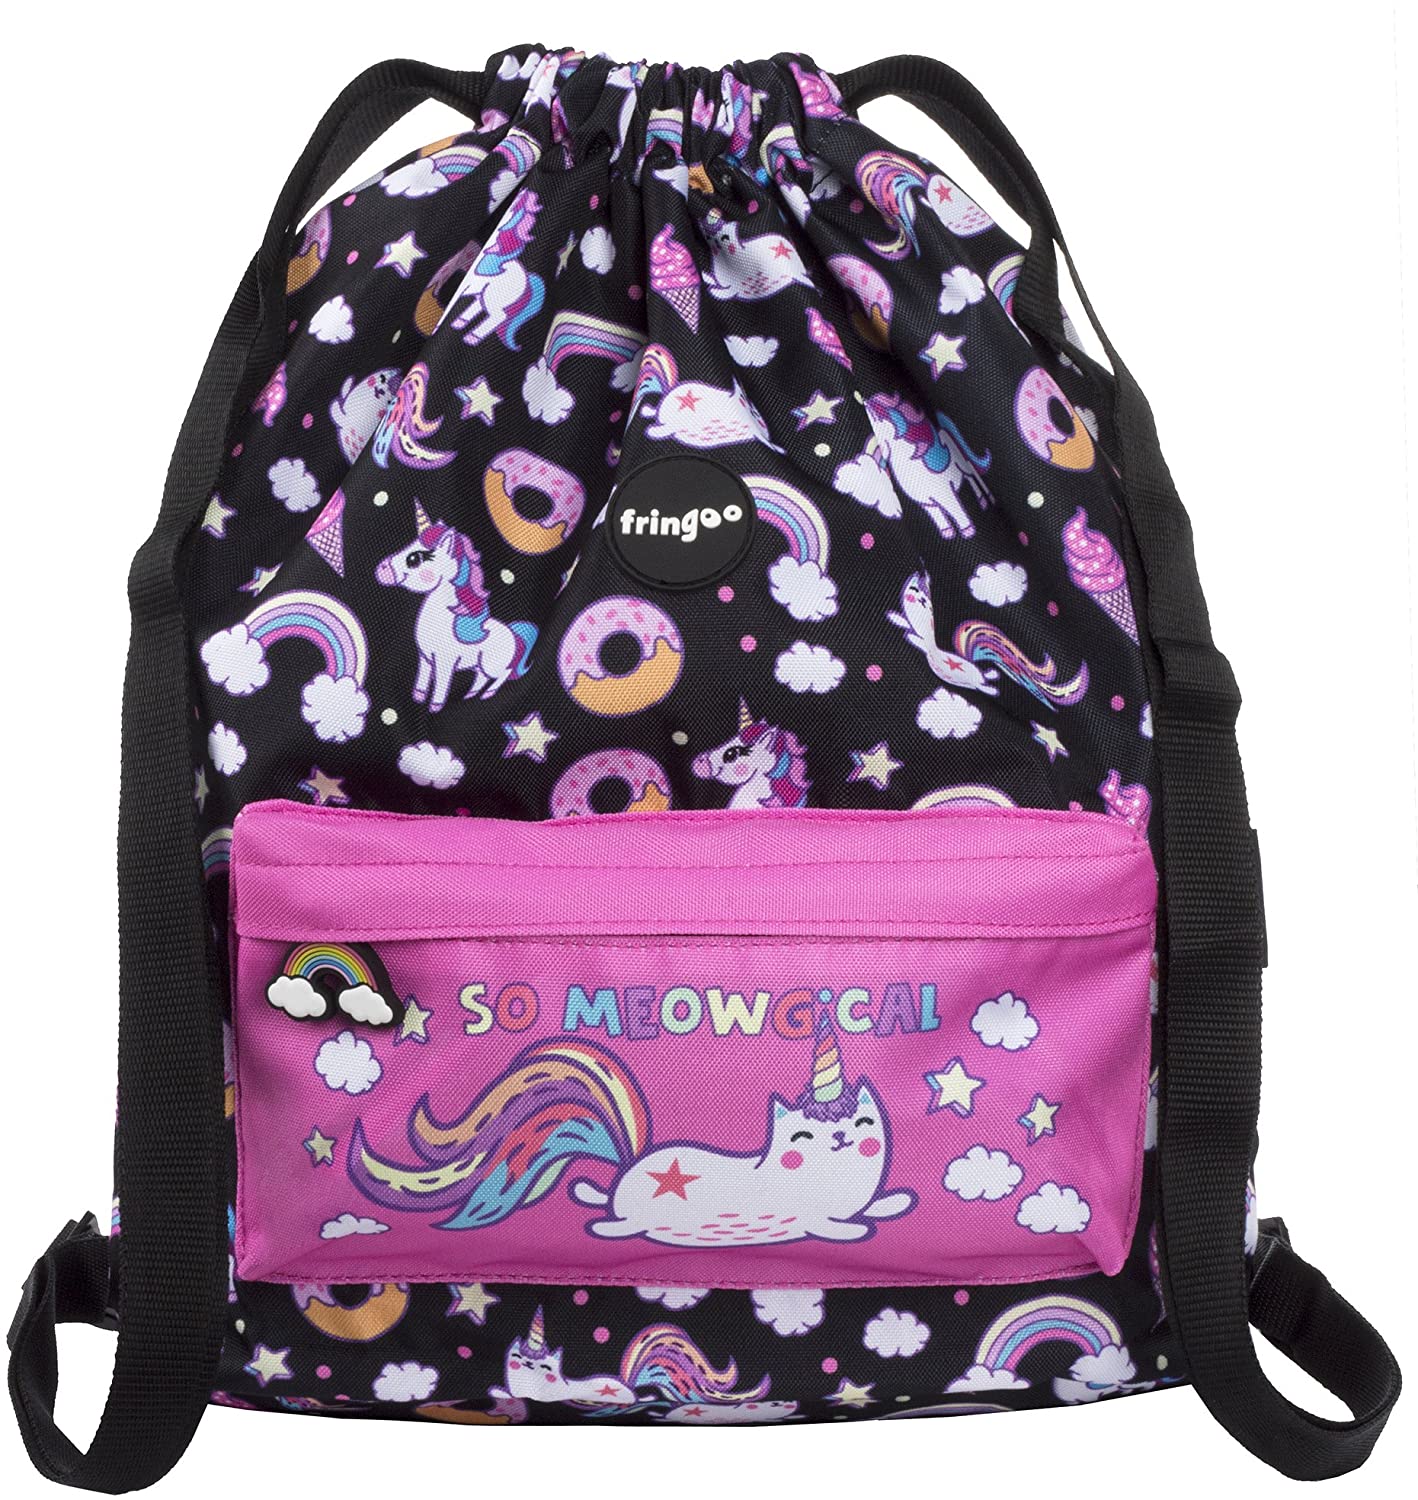 FRINGOO® Kids Drawstring Bag Large School Backpack PE Kit Bag Zipped